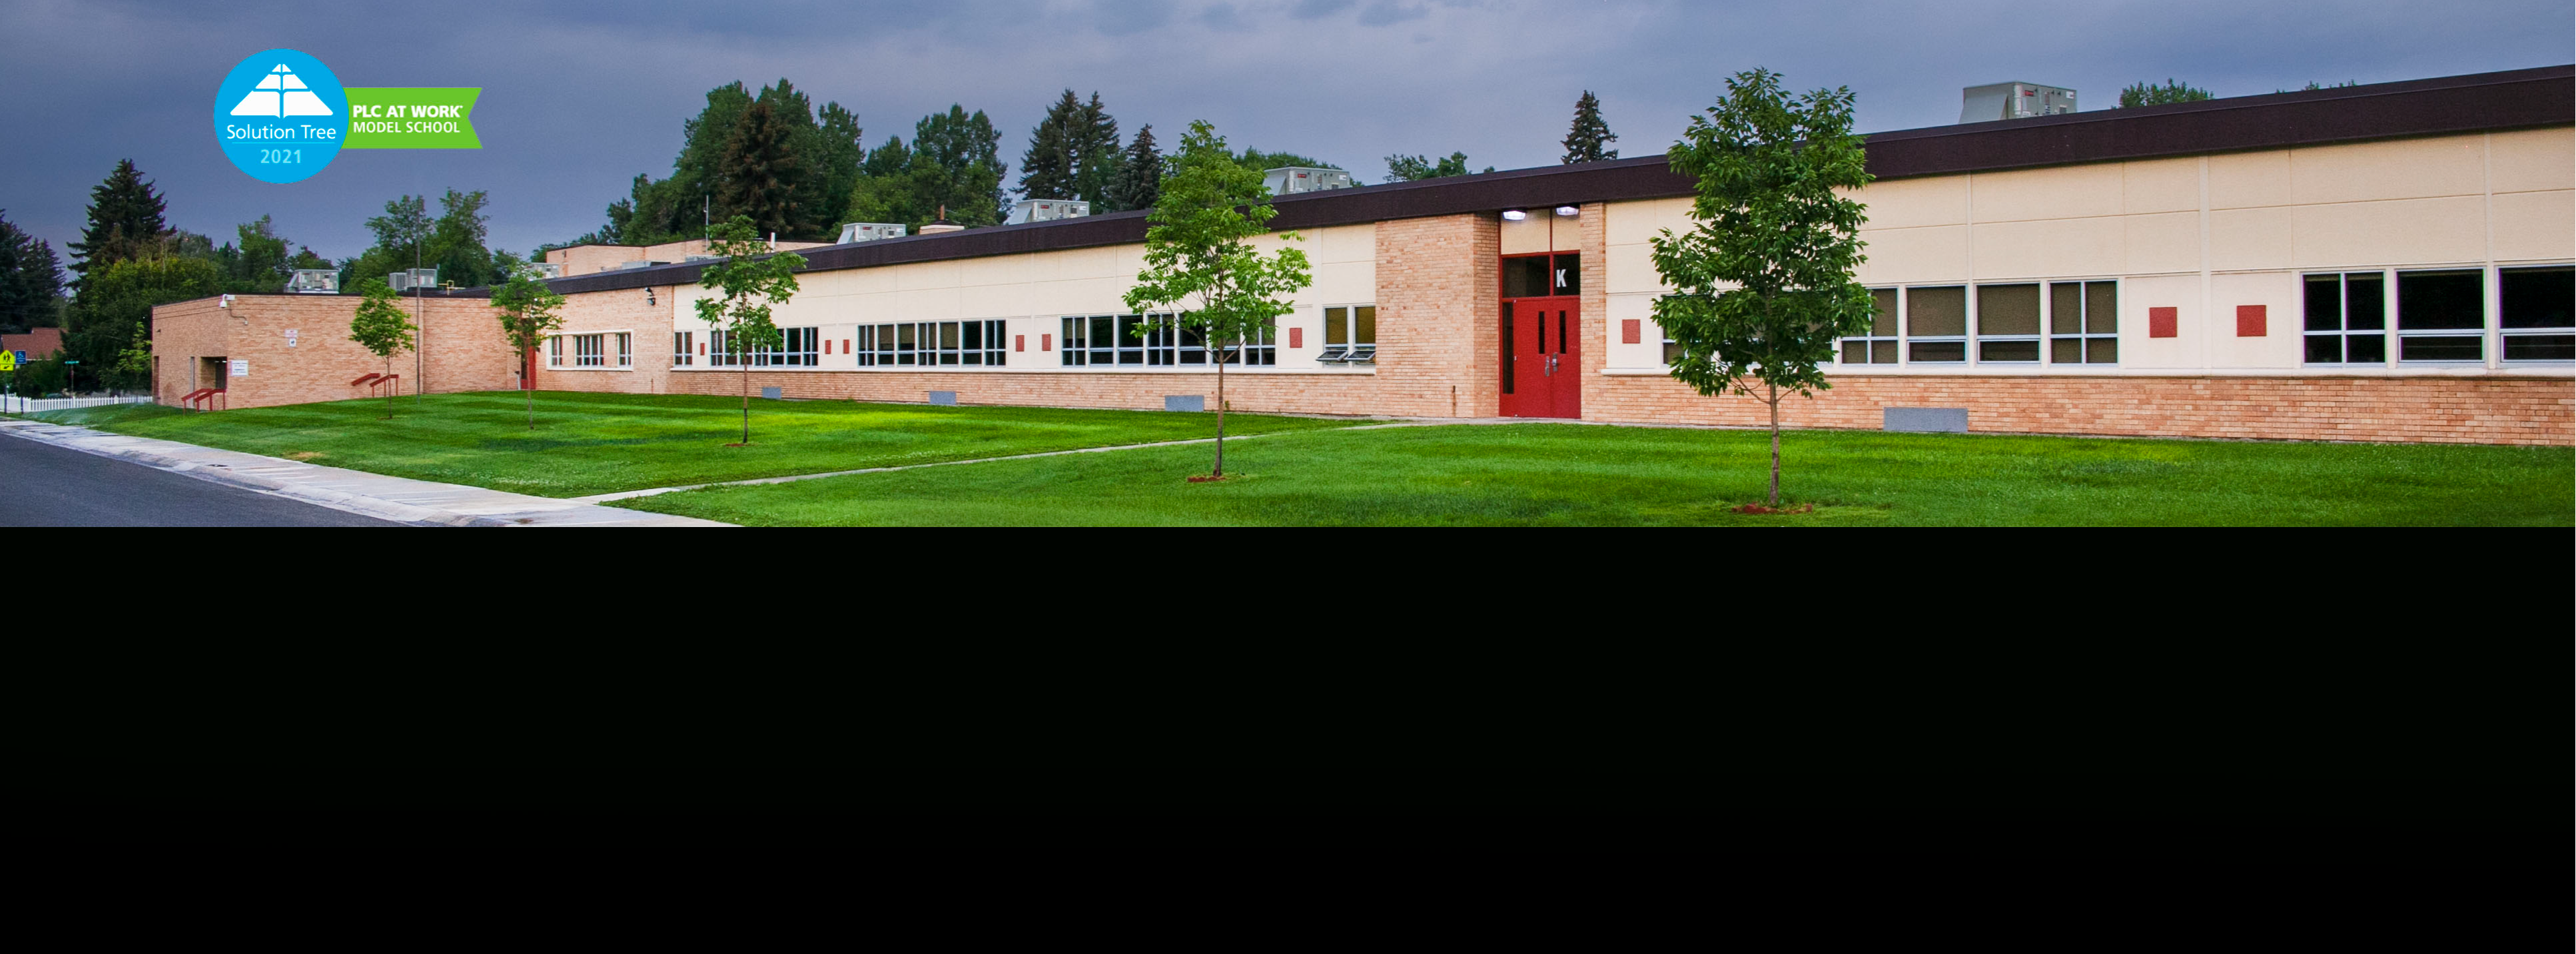 Ashgrove Elementary School